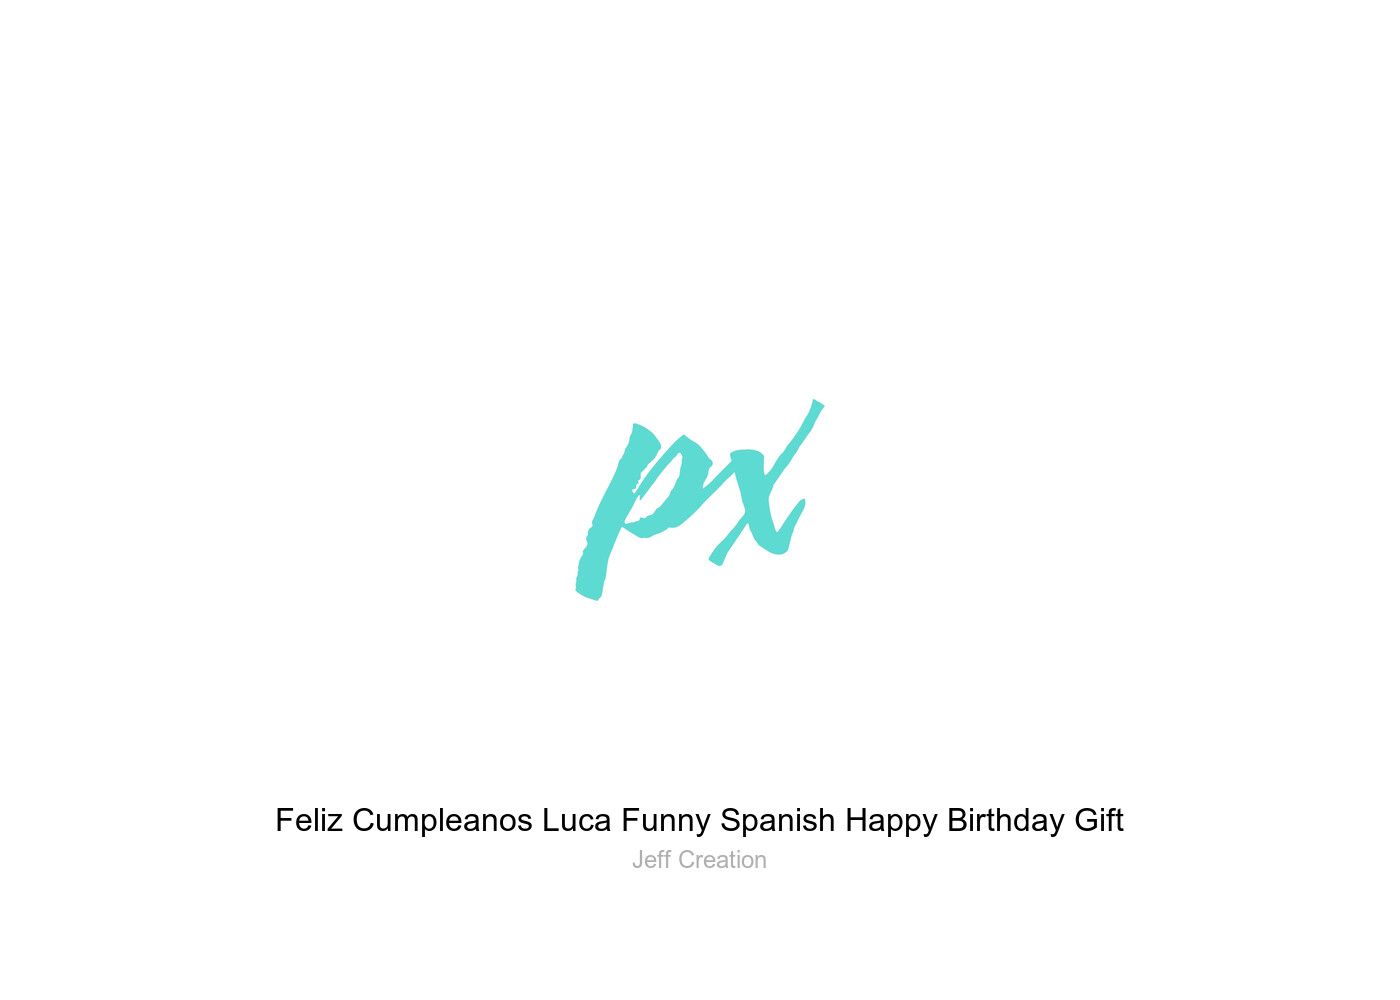 Feliz Cumpleanos Luca Funny Spanish Happy Birthday Gift Greeting